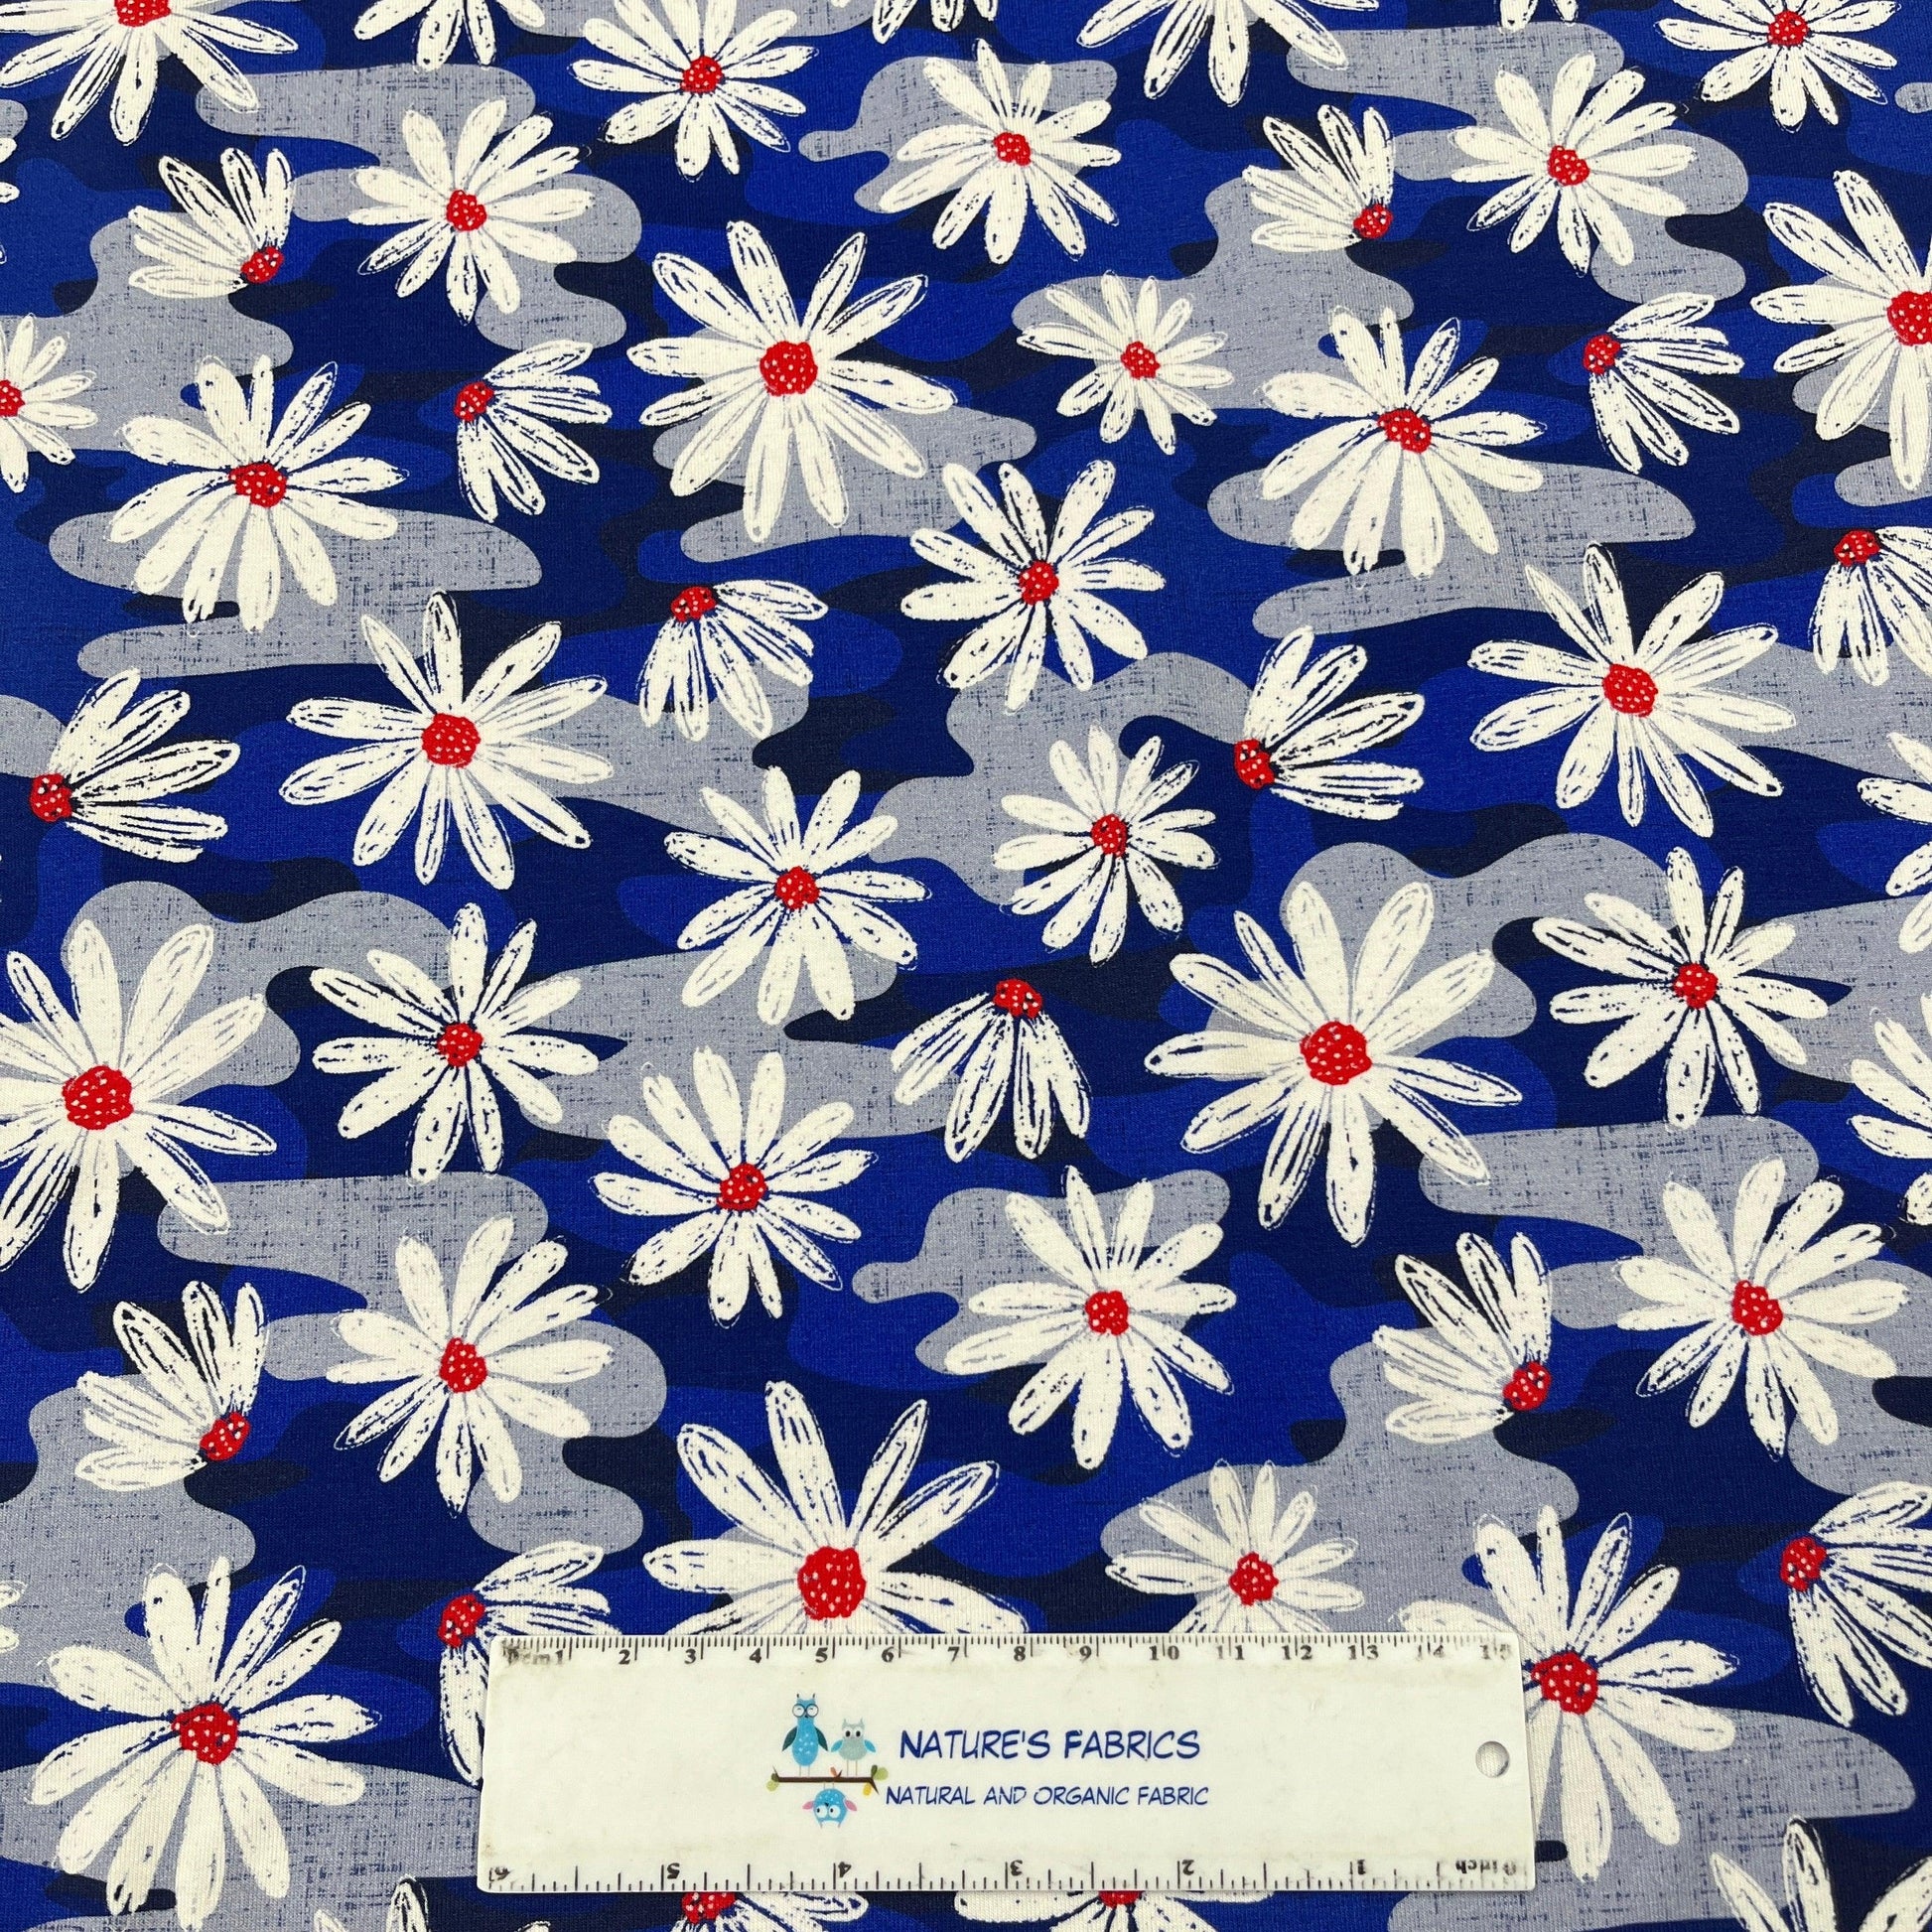 Patriotic Daisies on Bamboo/Spandex Jersey Fabric - Nature's Fabrics